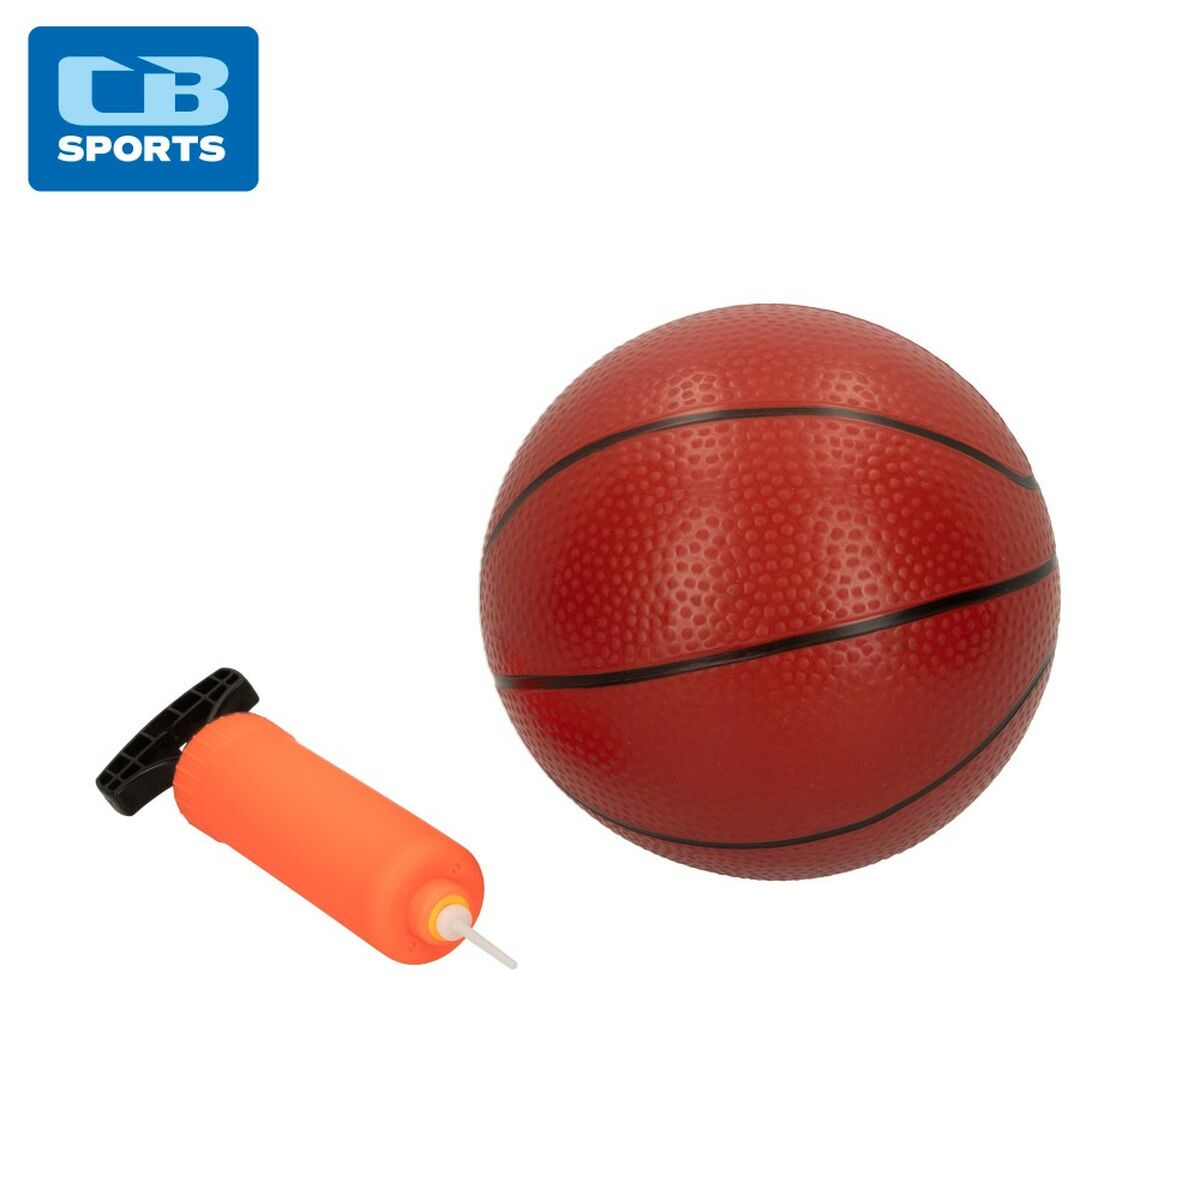 Basketkorg Colorbaby 39 x 28 x 39 cm-Leksaker och spel, Sport och utomhus-Colorbaby-peaceofhome.se